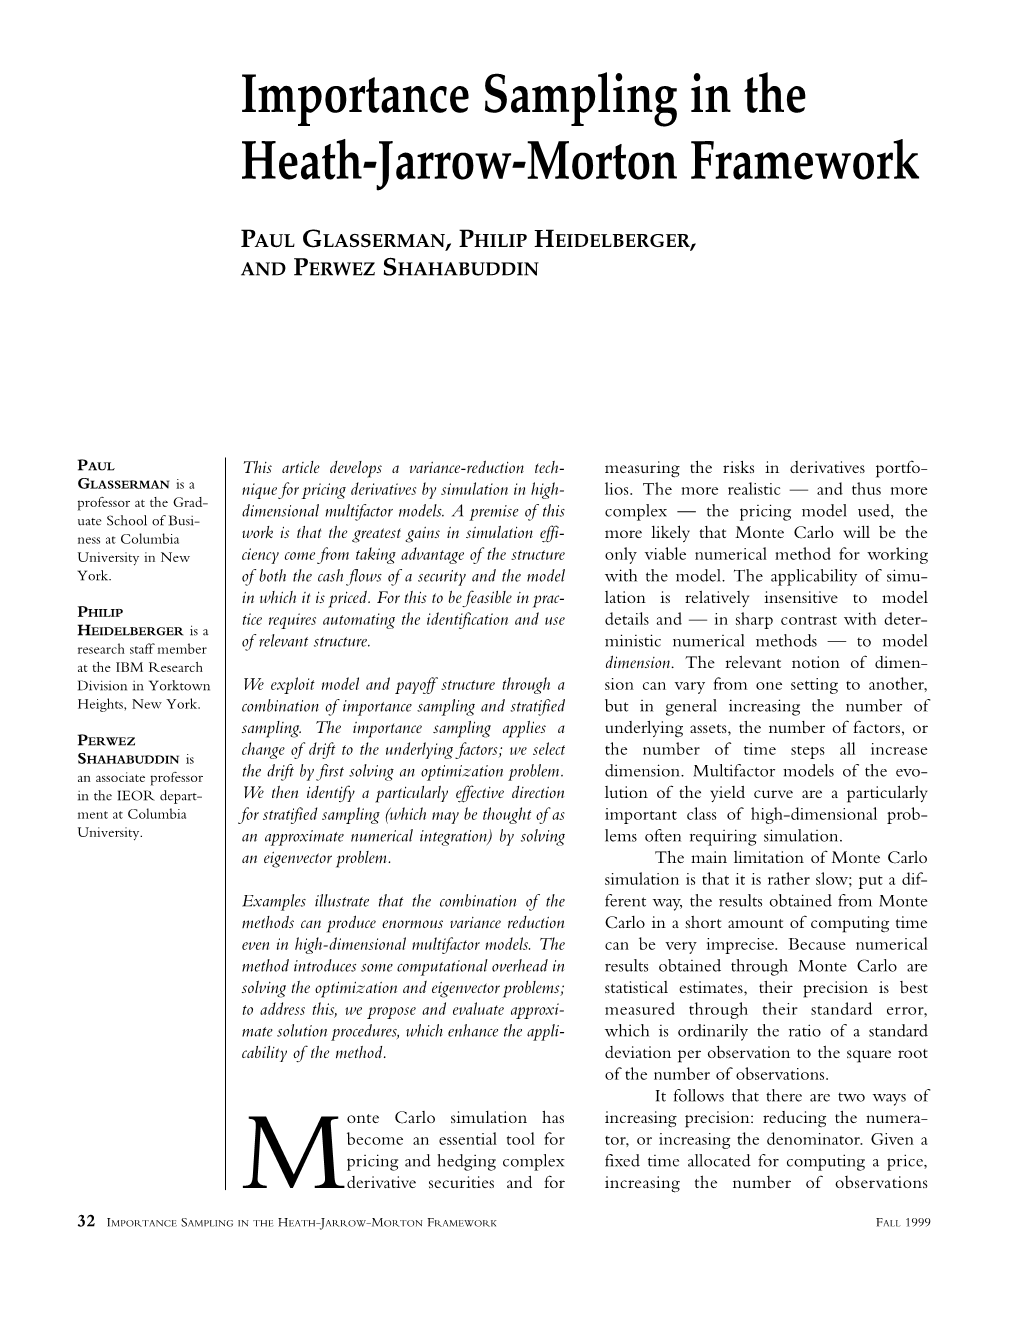 Importance Sampling in the Heath-Jarrow-Morton Framework